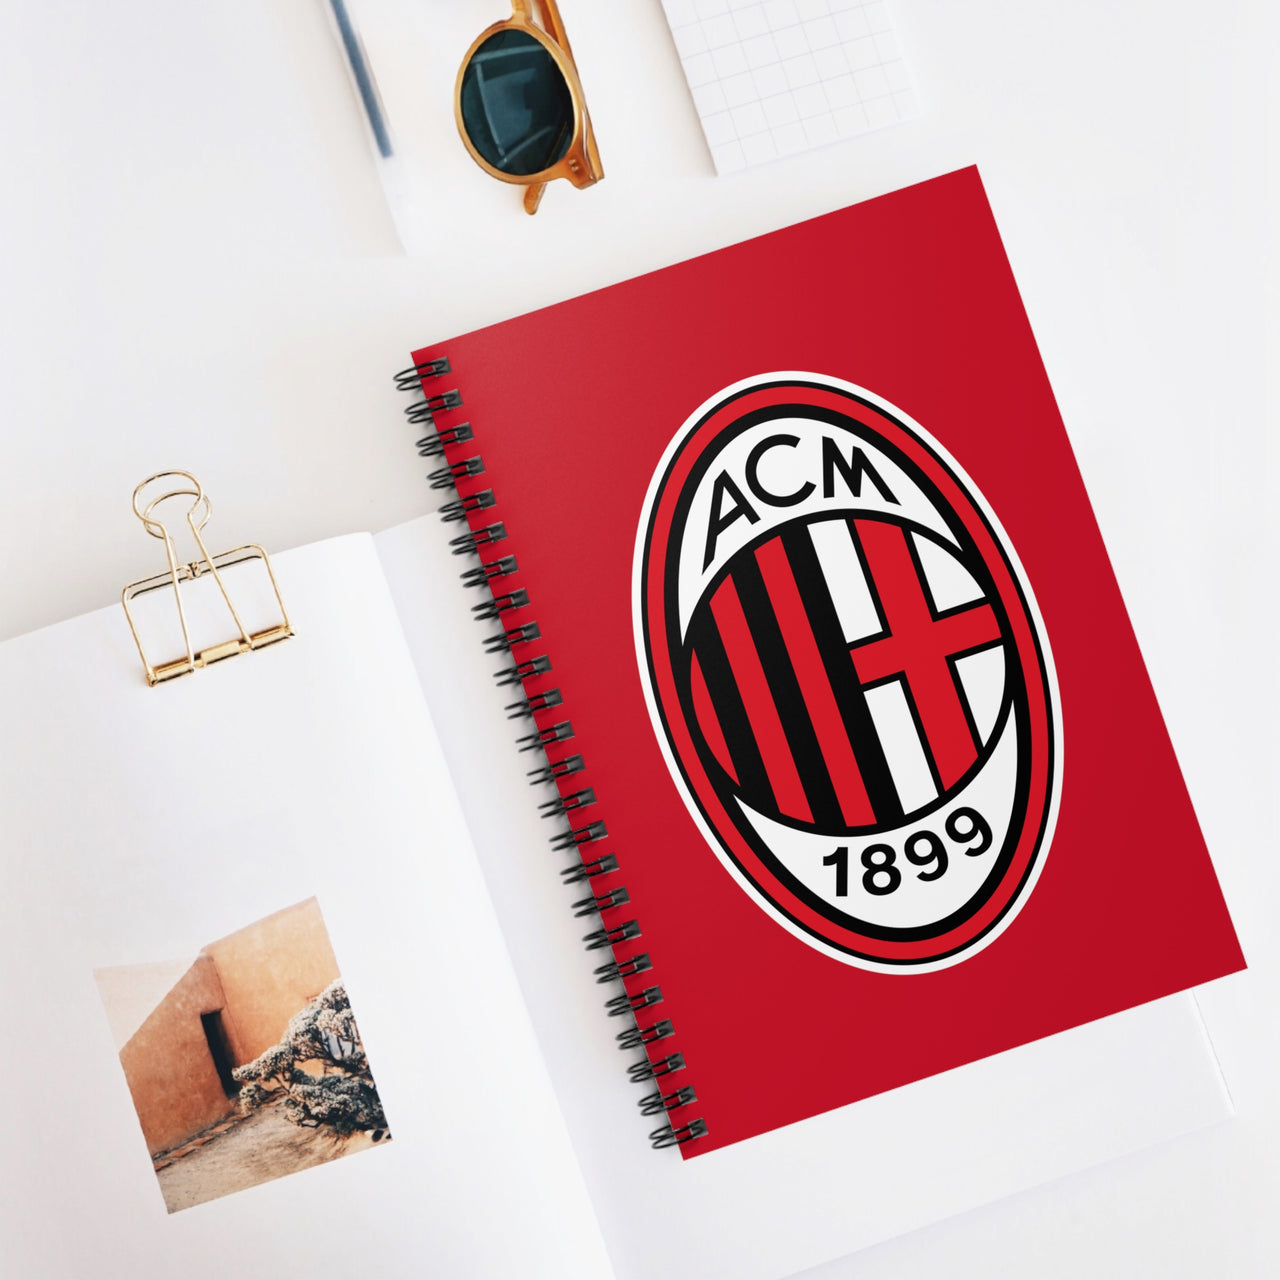 AC Milan Spiral Notebook - Ruled Line